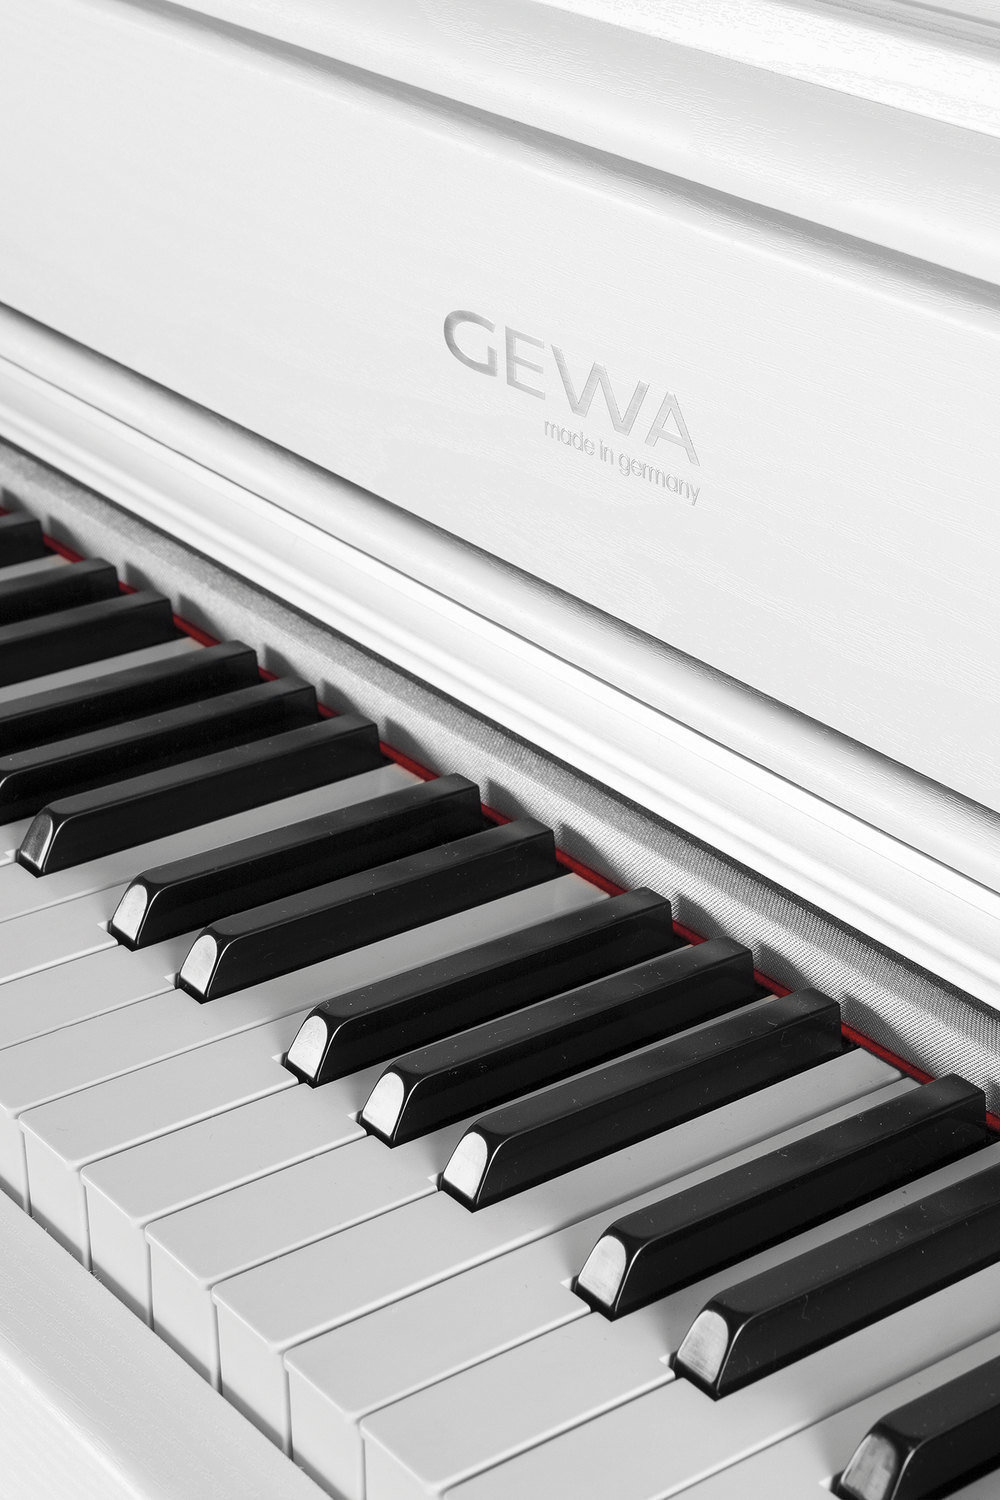 Gewa Up 385 G Blanc - Digitalpiano mit Stand - Variation 4